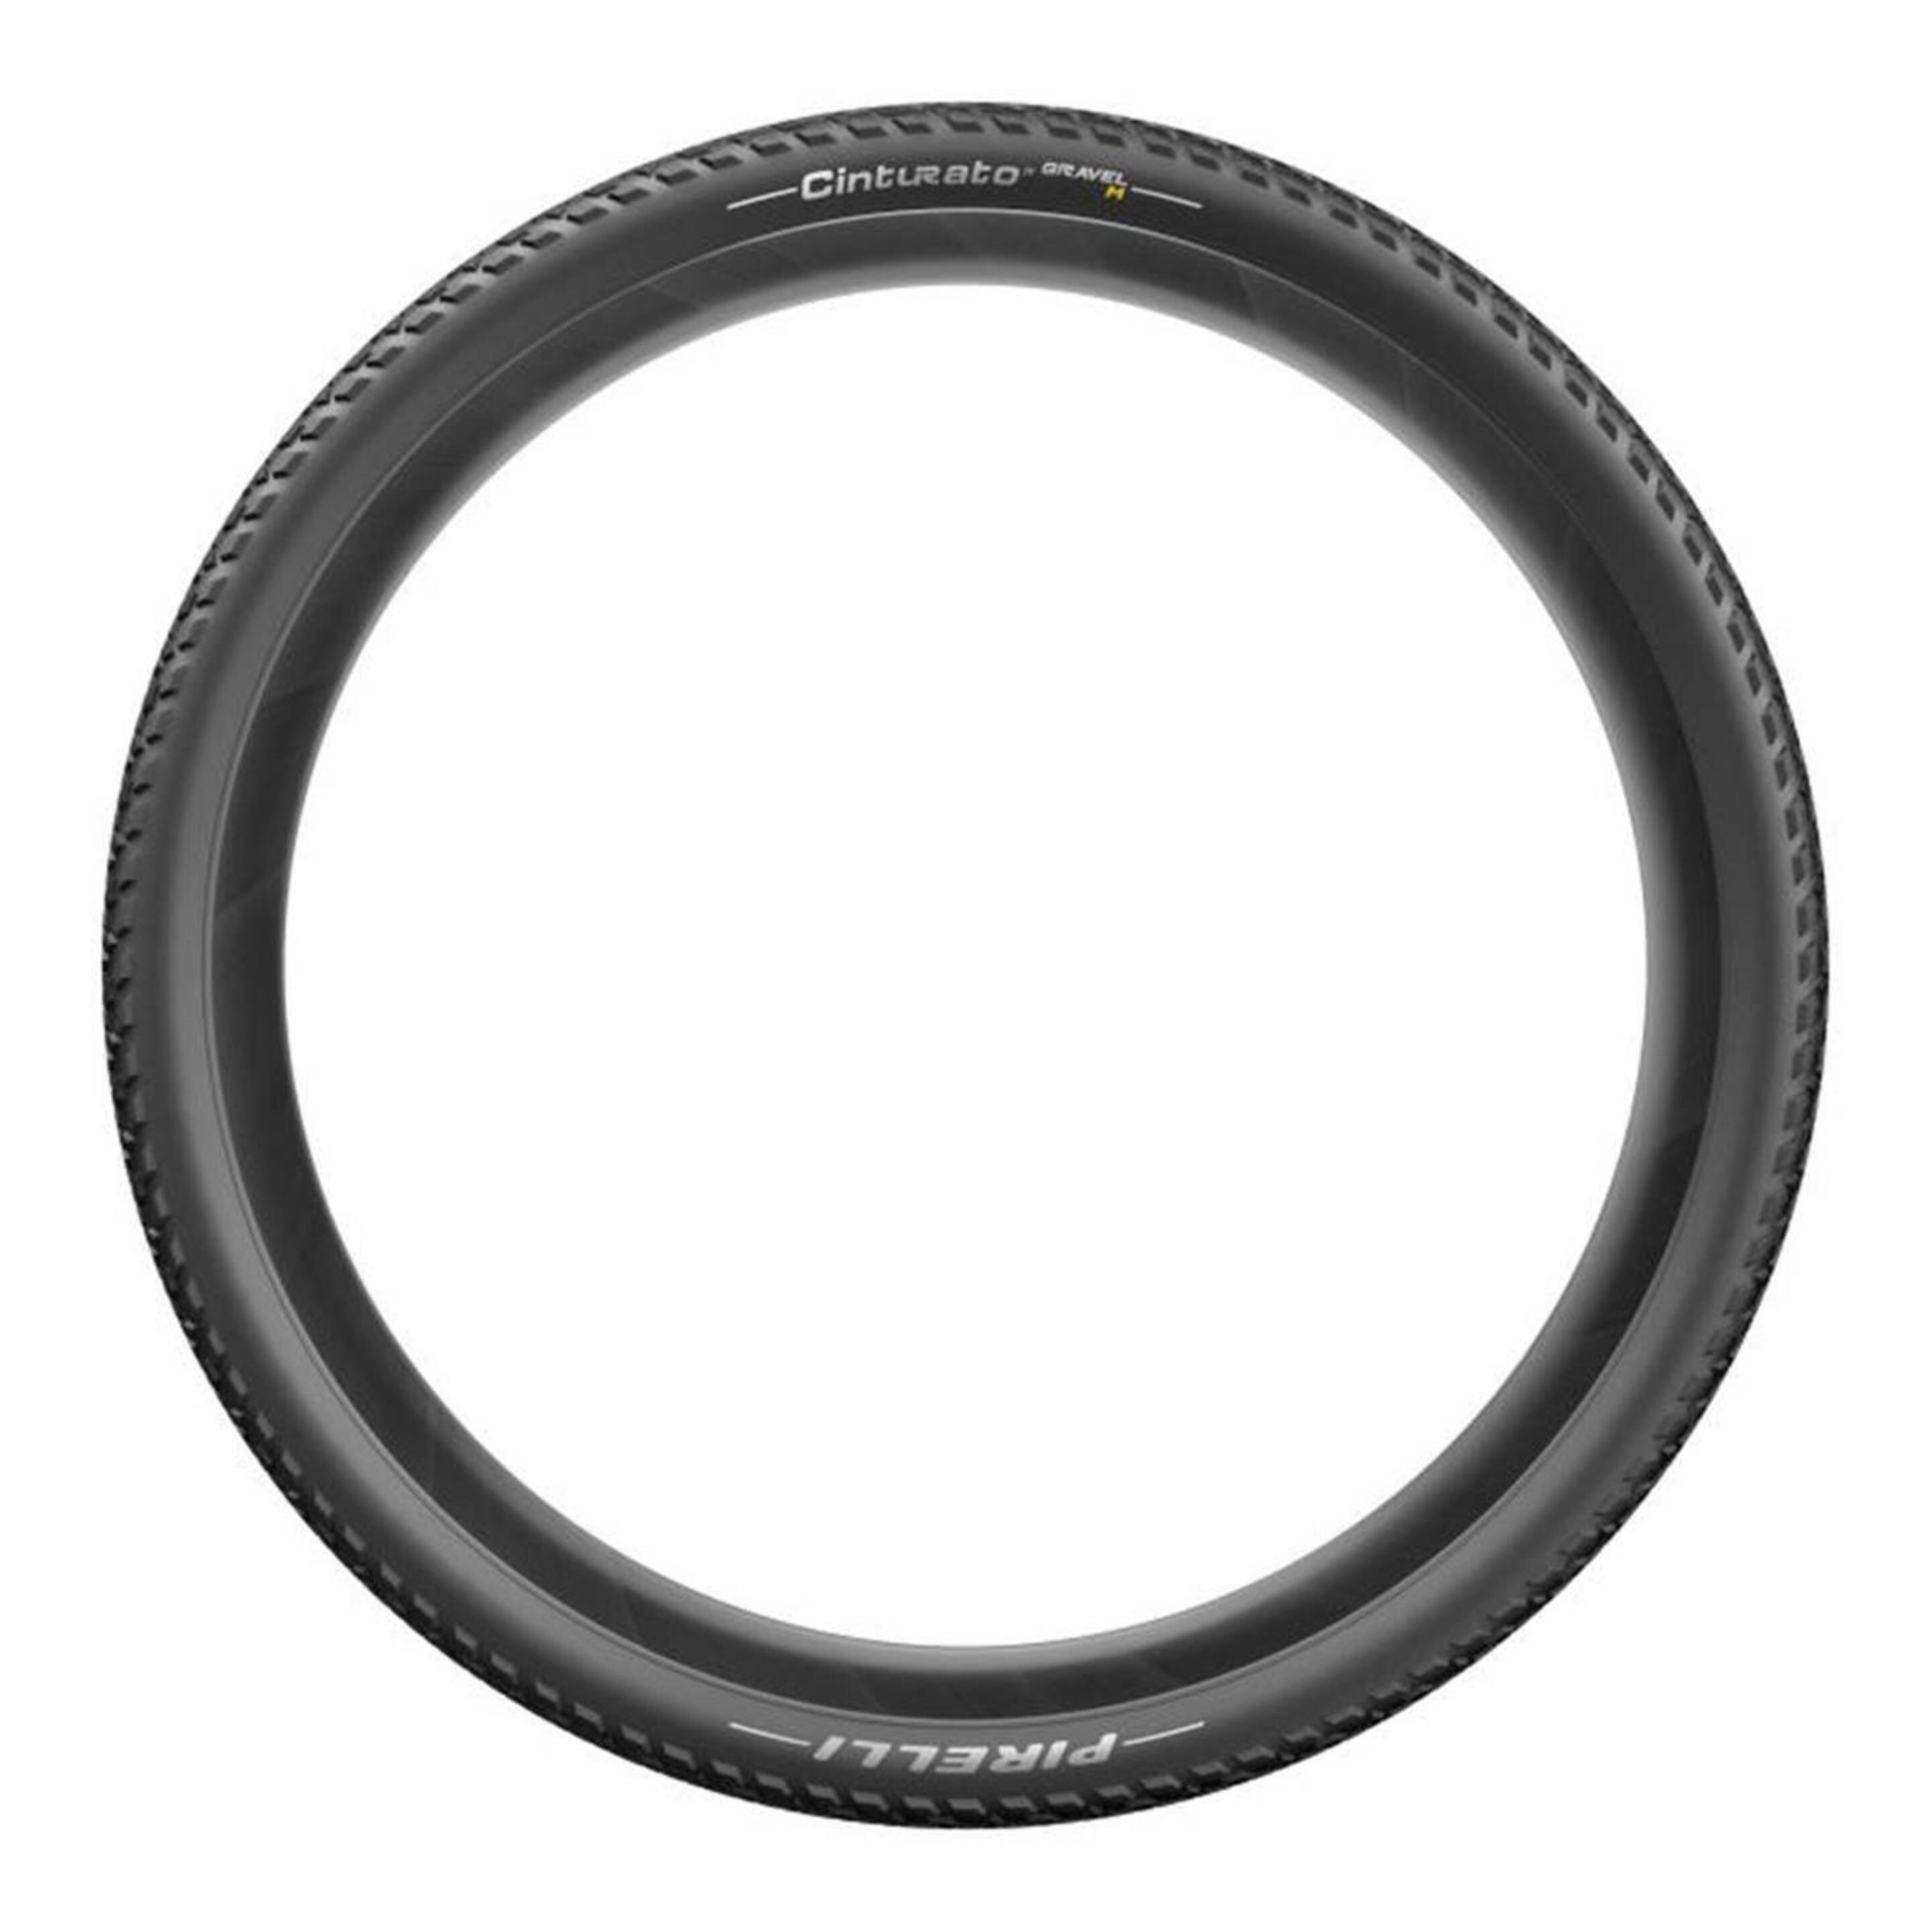 Neumático Pirelli Cinturato Gravel Mixto Tlr 700x35 - negro  MKP